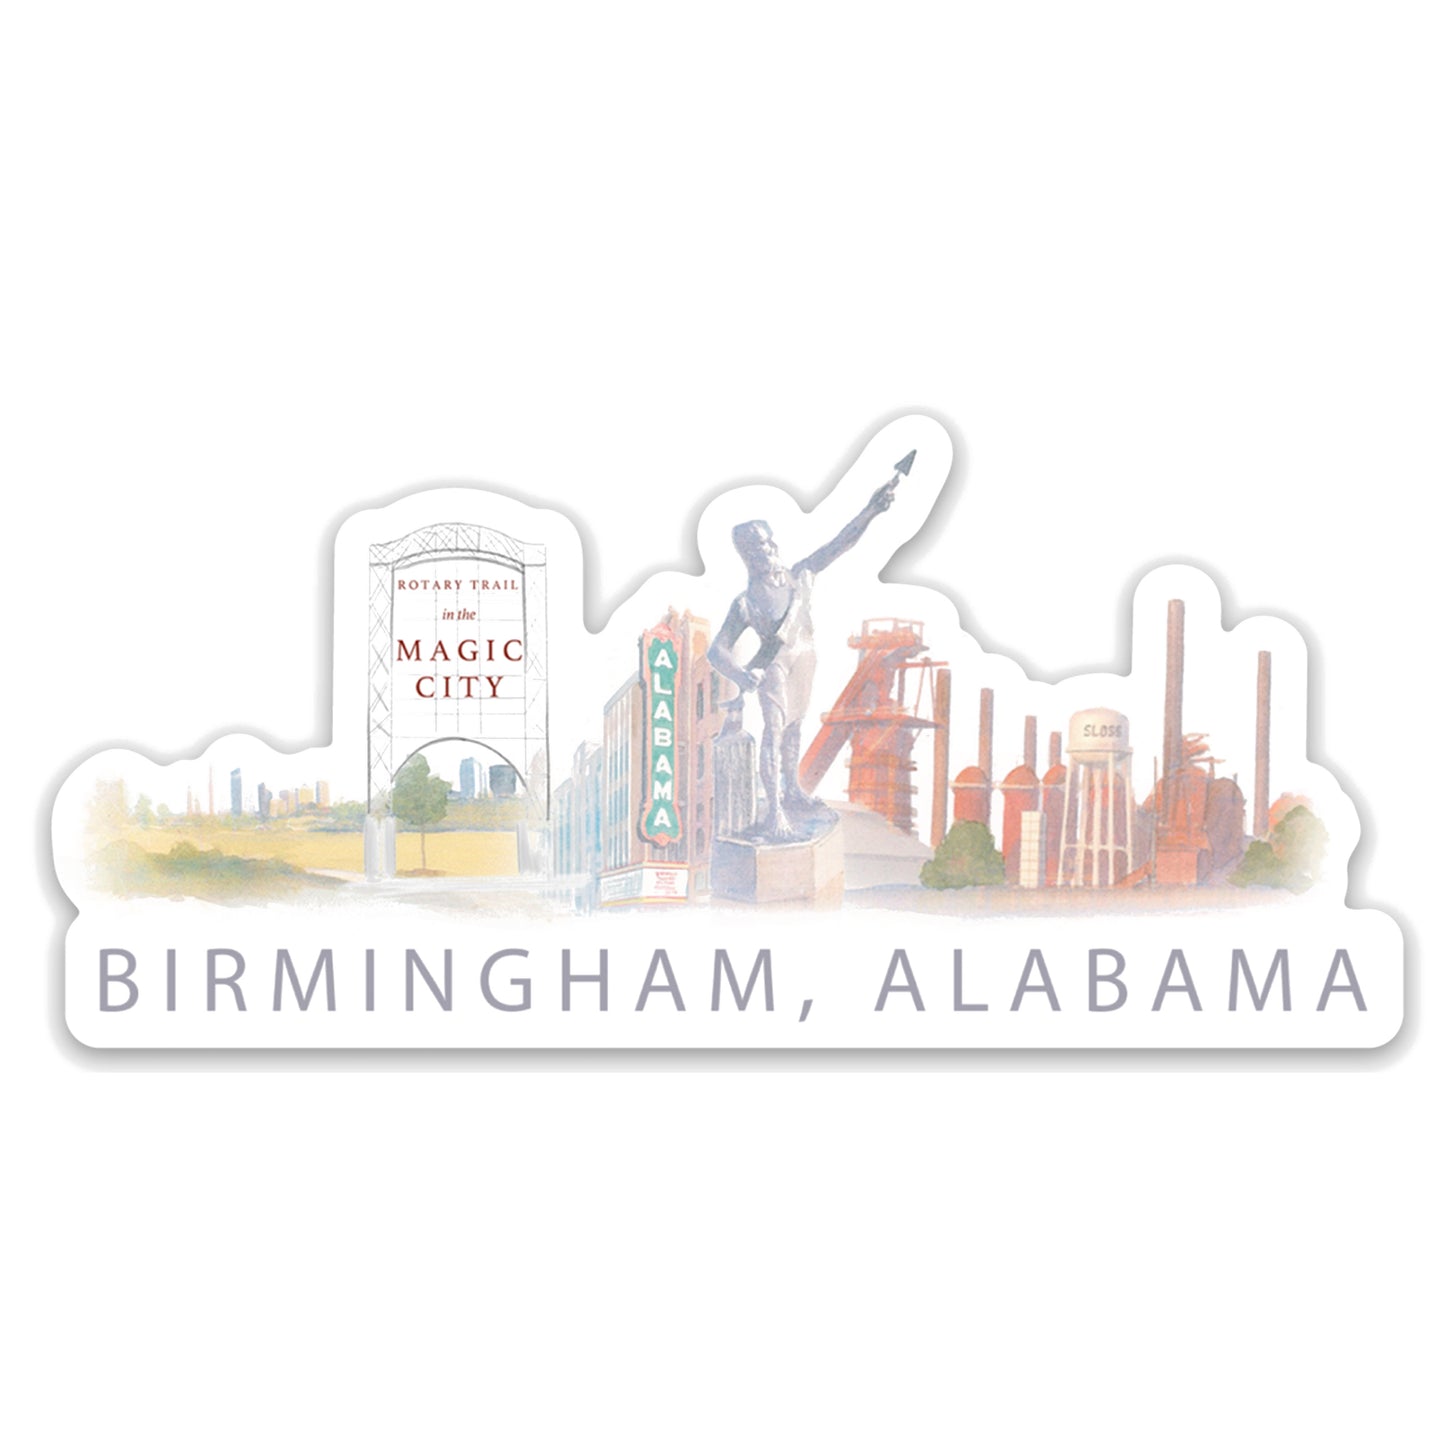 Birmingham, Alabama sticker